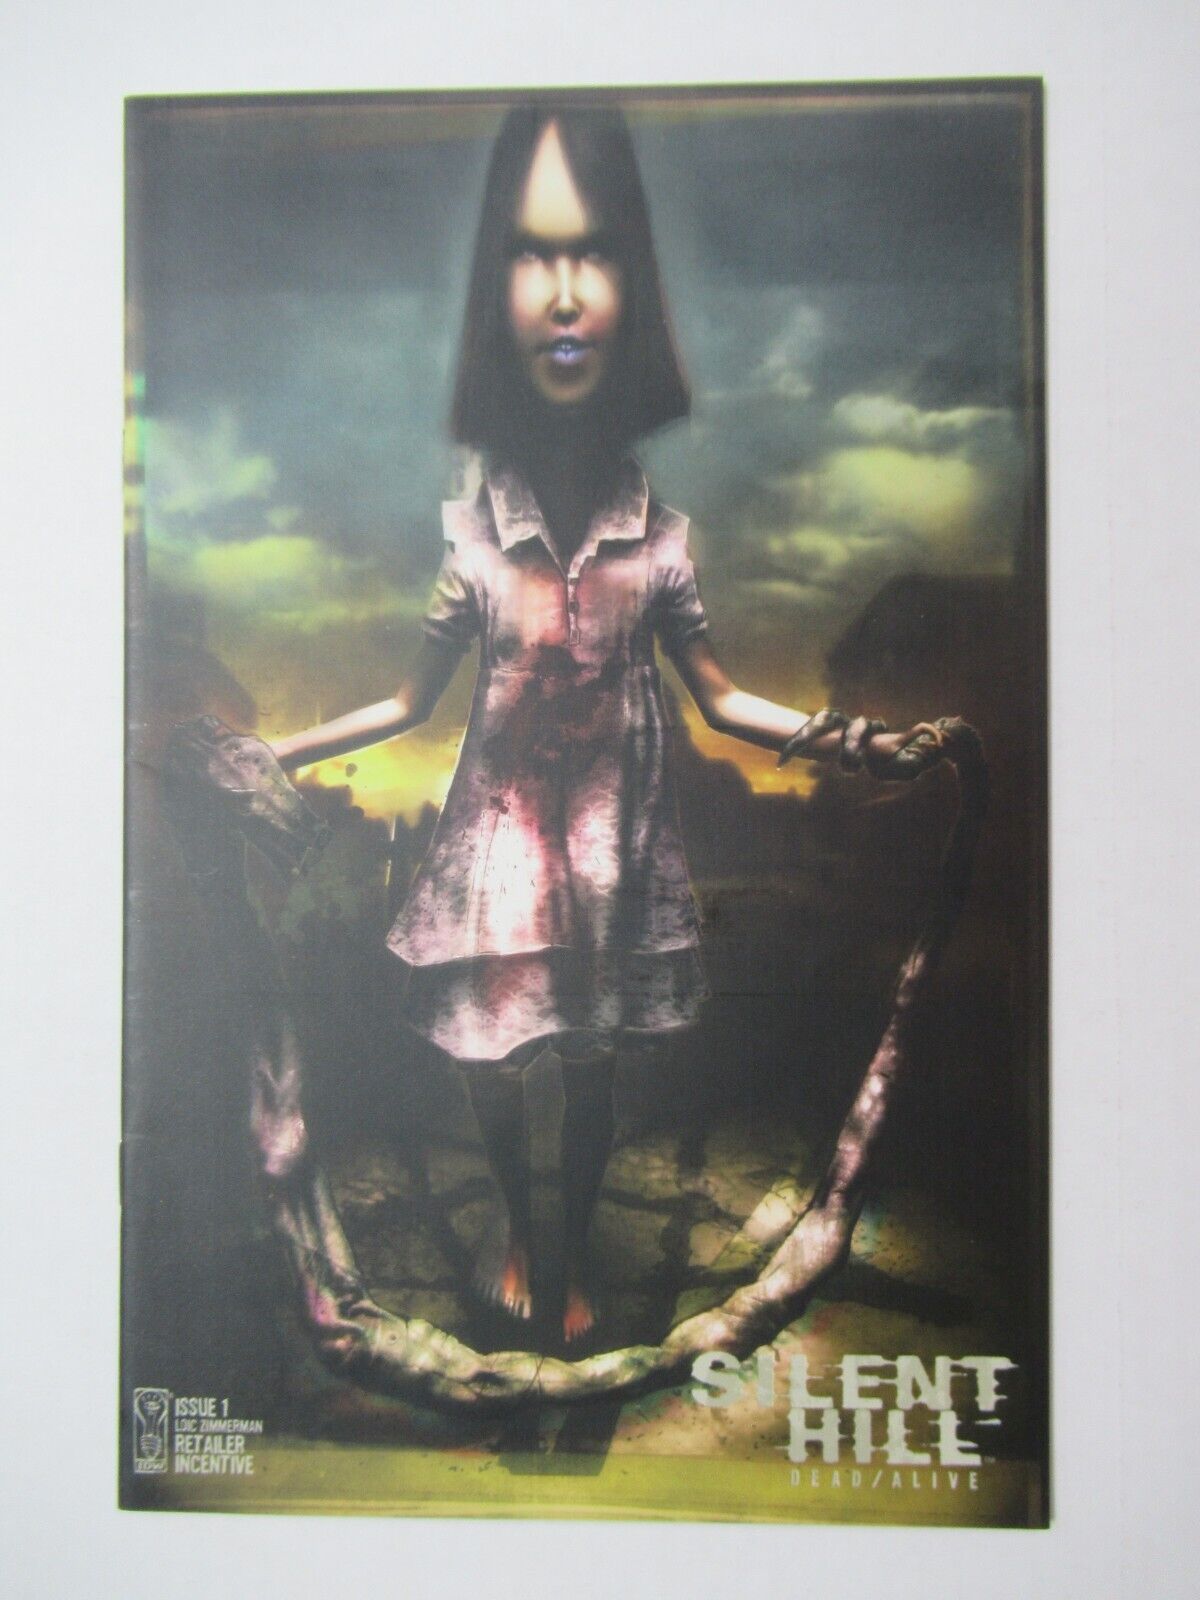 2005 IDW Comics Silent Hill Dead/Alive #1 Retailer Incentive Variant